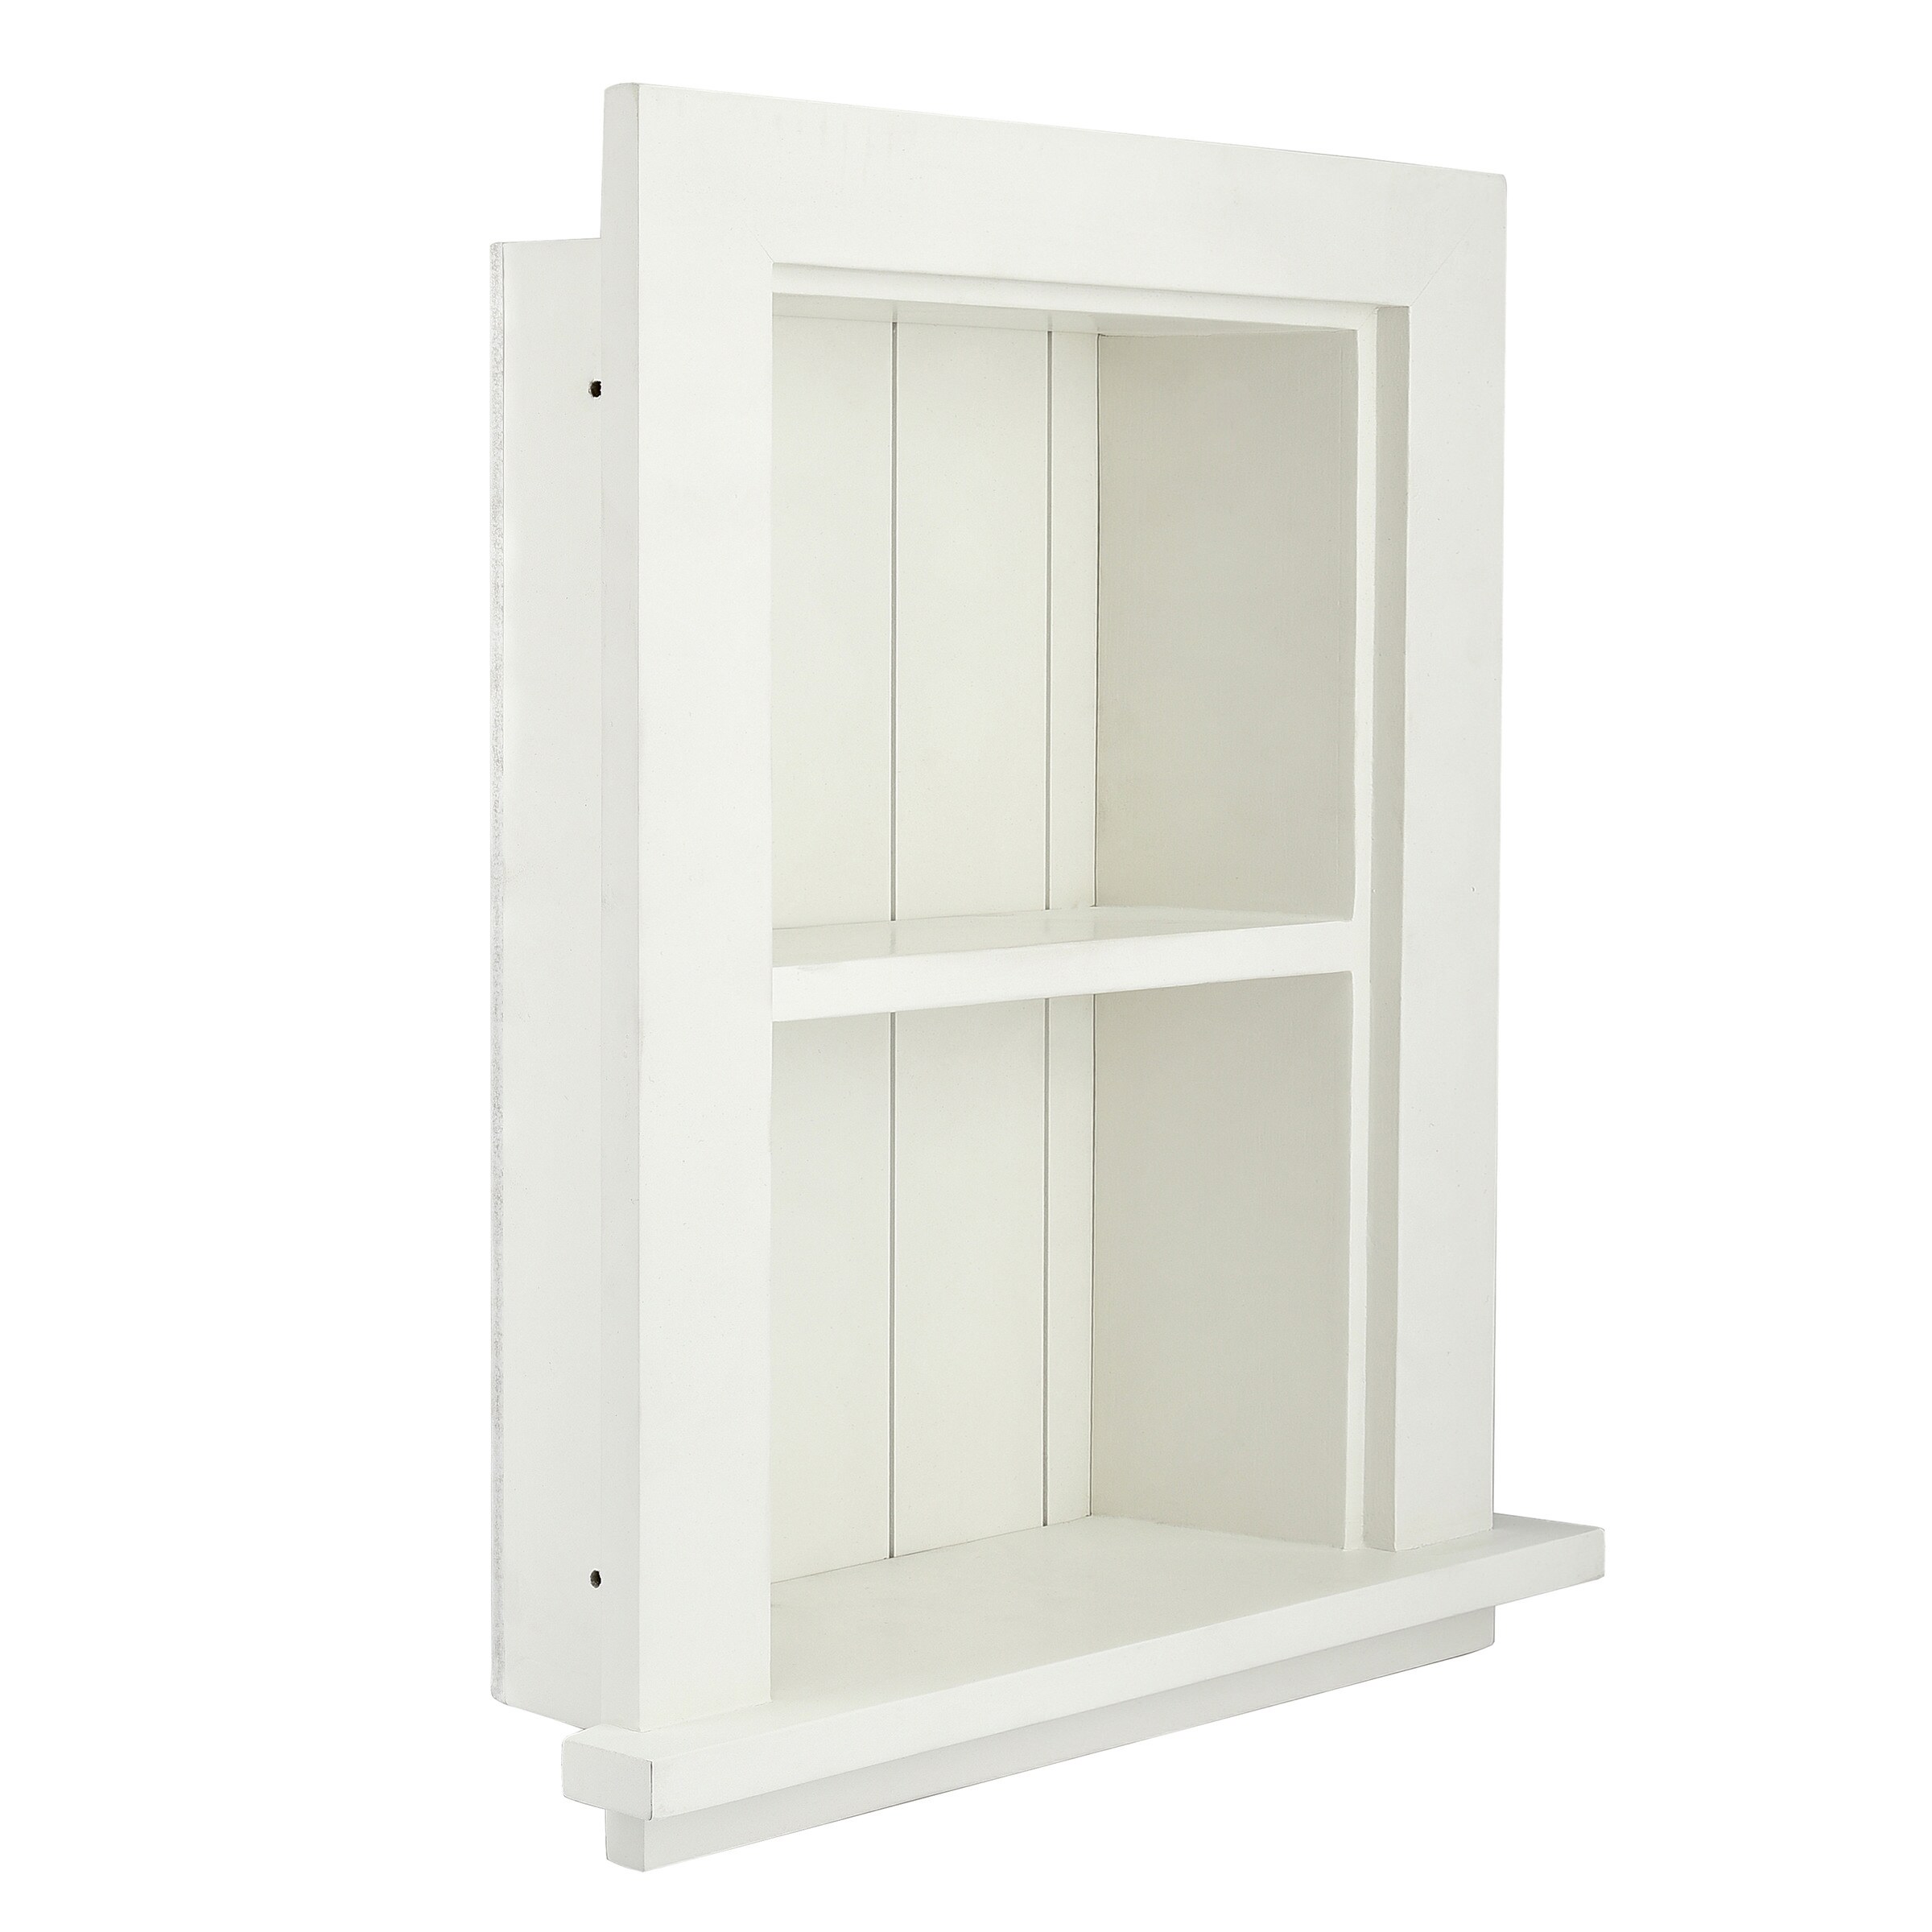 Buy Online, Adhesive Shelf Wall Mounted White Storage Manufacturer